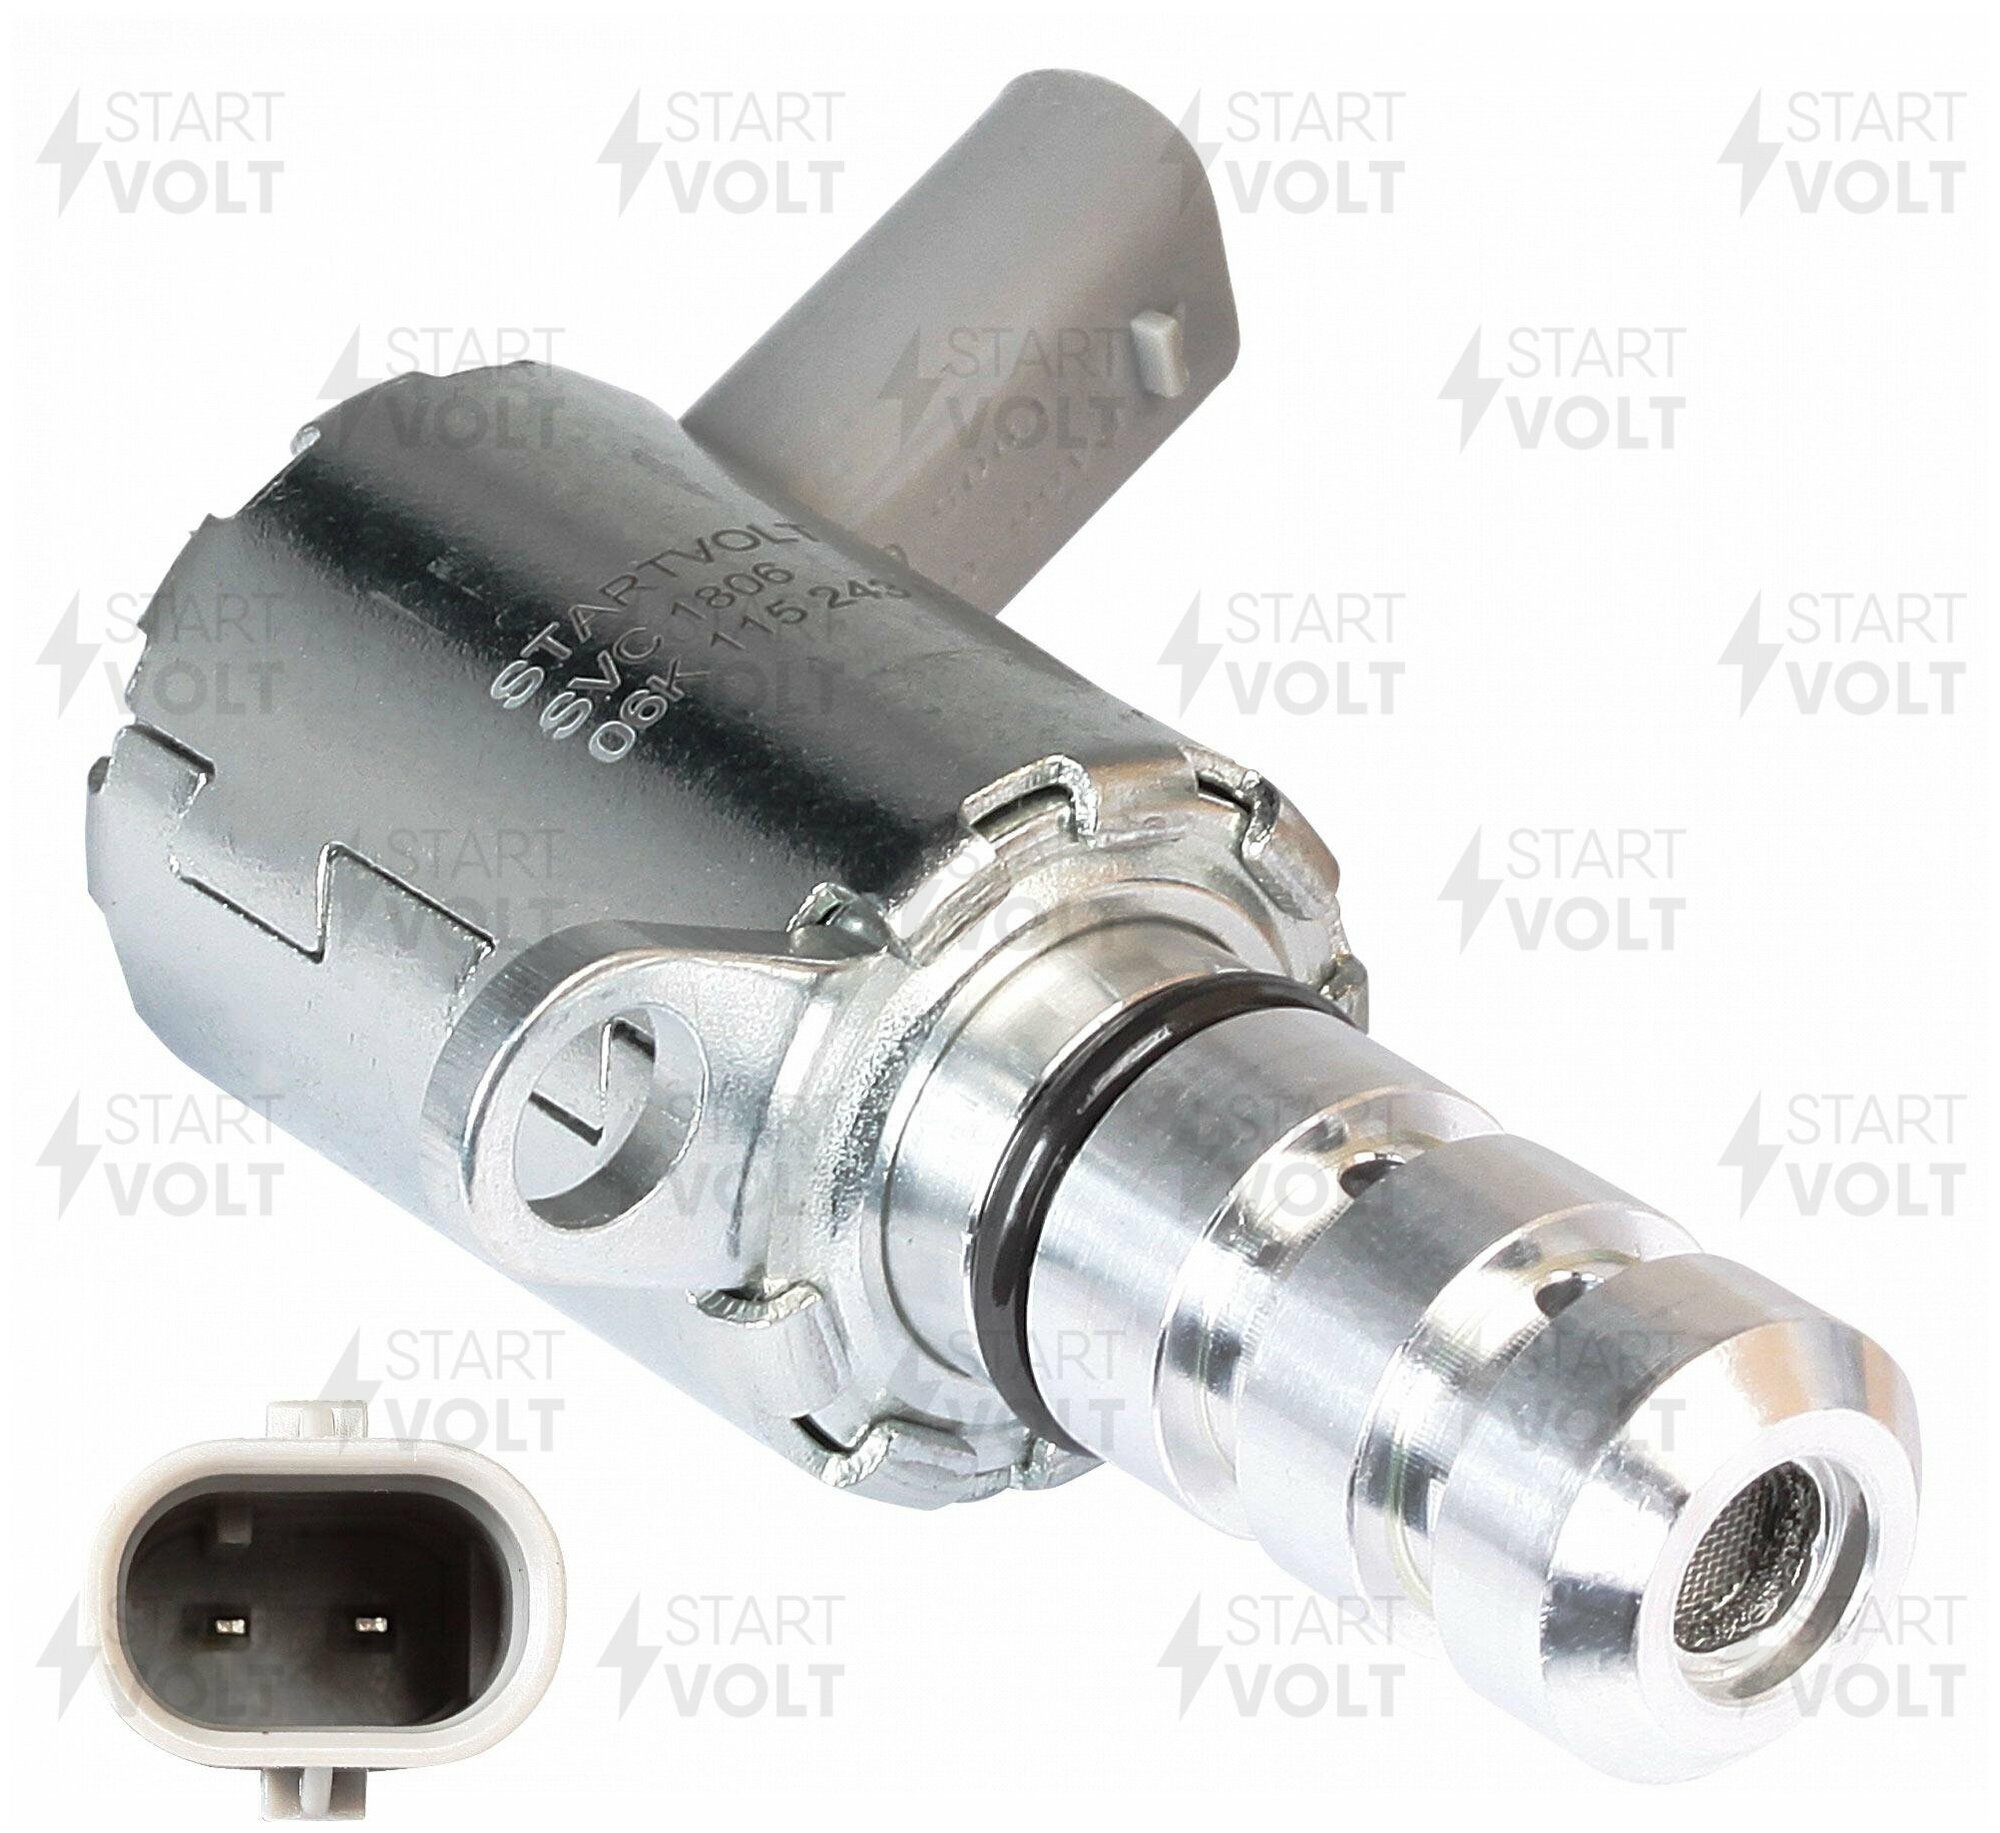 Клапан электромагнитный регулировки фаз ГРМ для автомобилей VAG Tiguan (17-)/Kodiaq (17-) 2.0TSi/TFSi SVC 1806 StartVolt